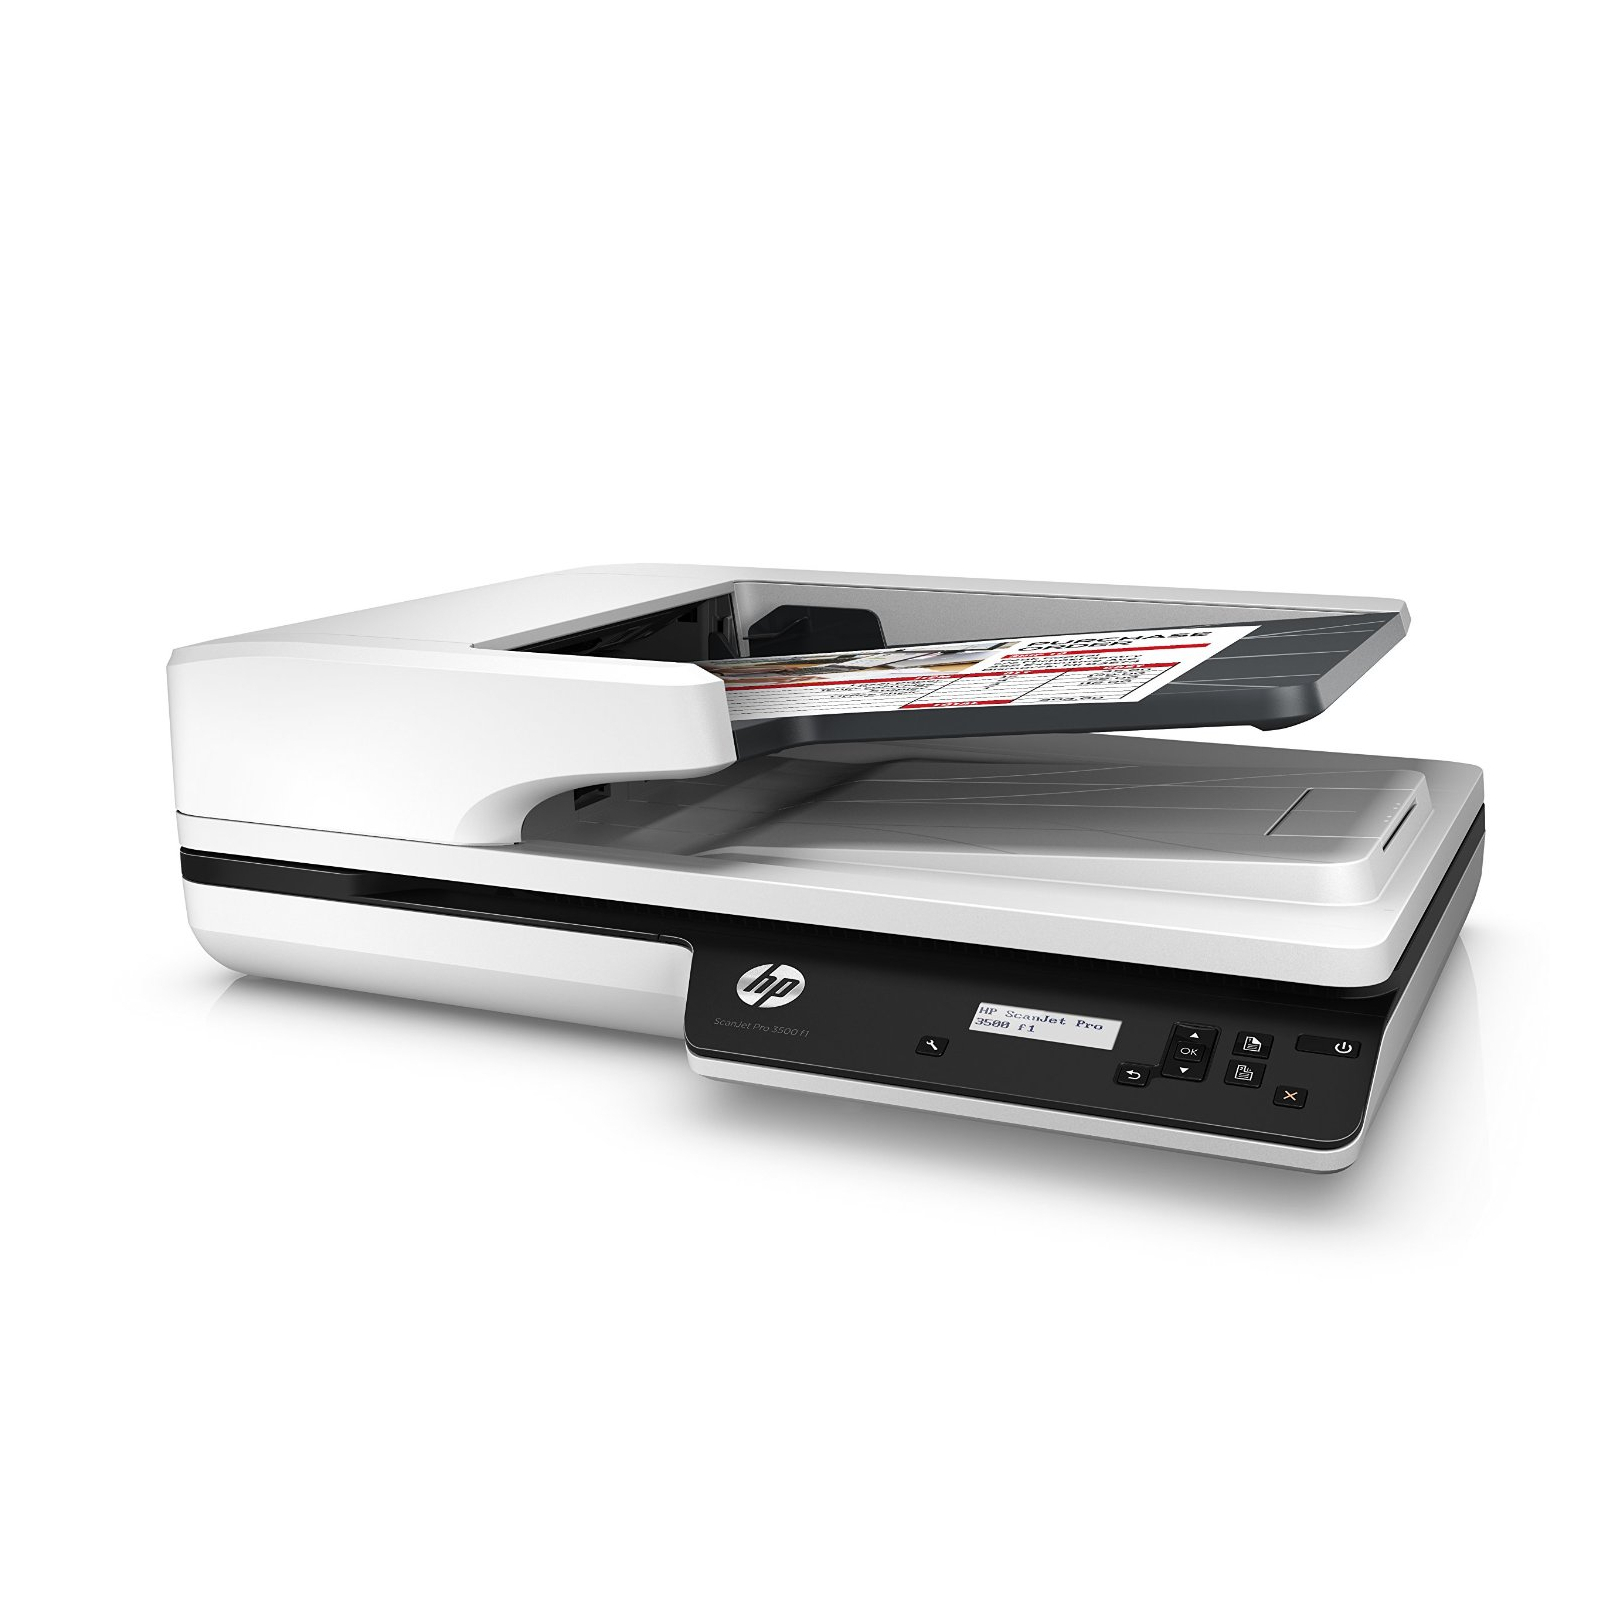 Сканер Scan Jet Pro 3500 f1 HP (L2741A)